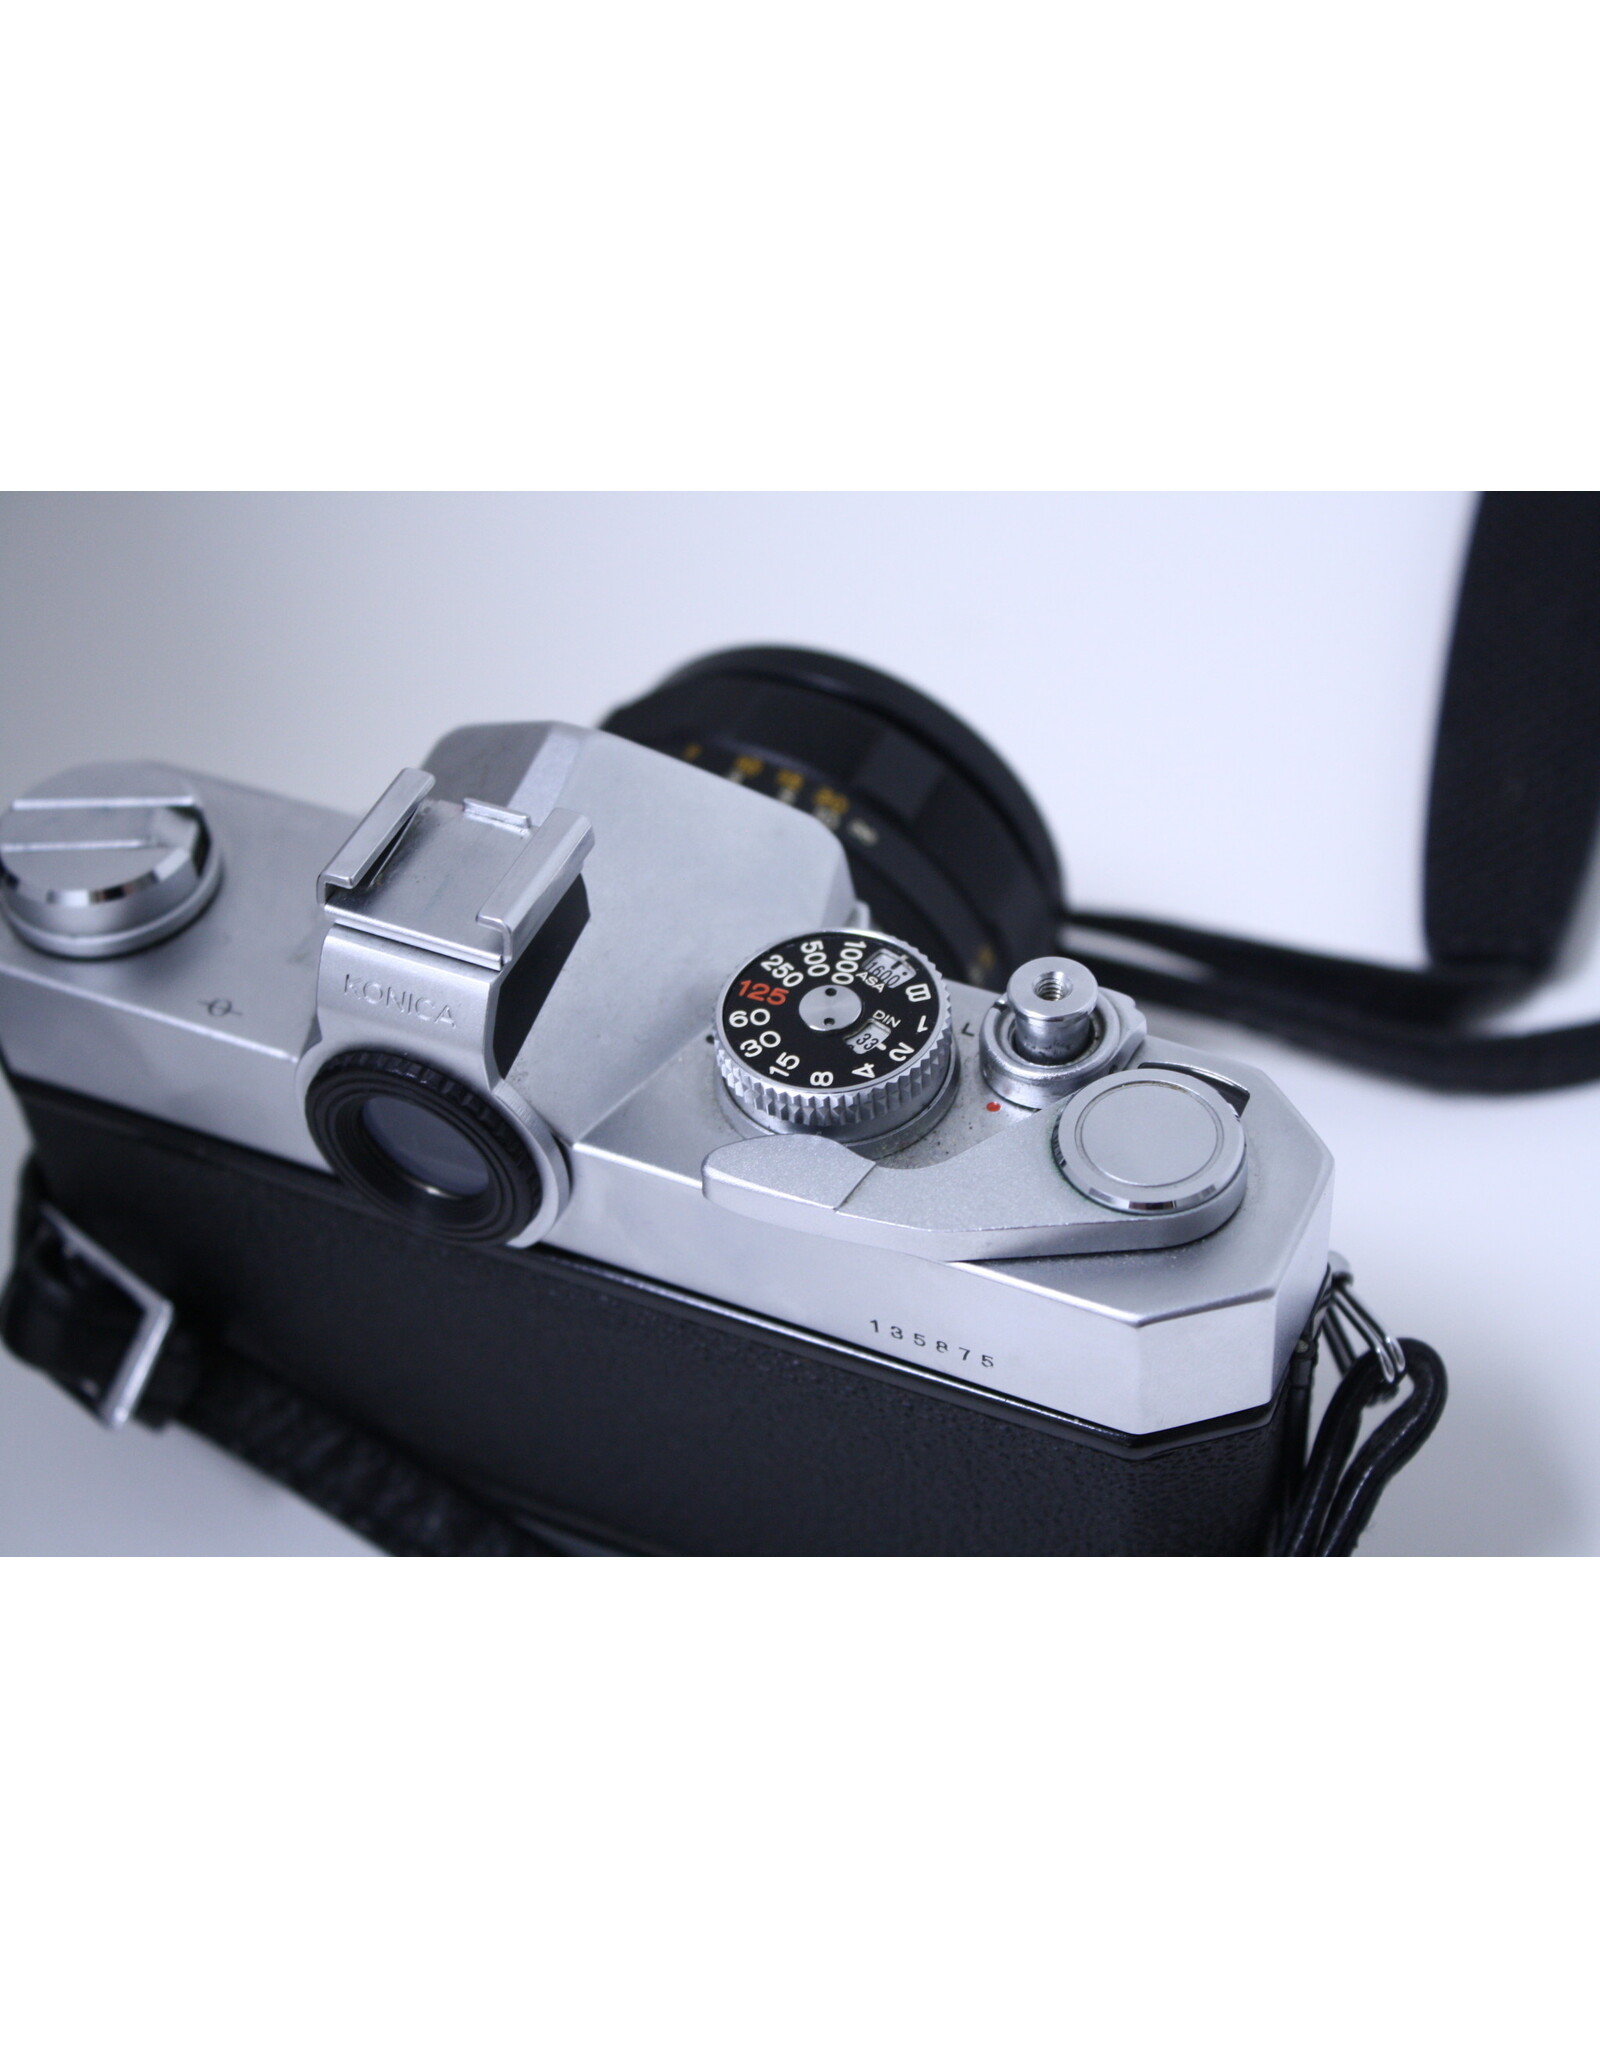 Konica Minolta Konica Autoreflex T 35mm Film SLR with 57mm f1.4 Hexanon Lens (TESTED!)